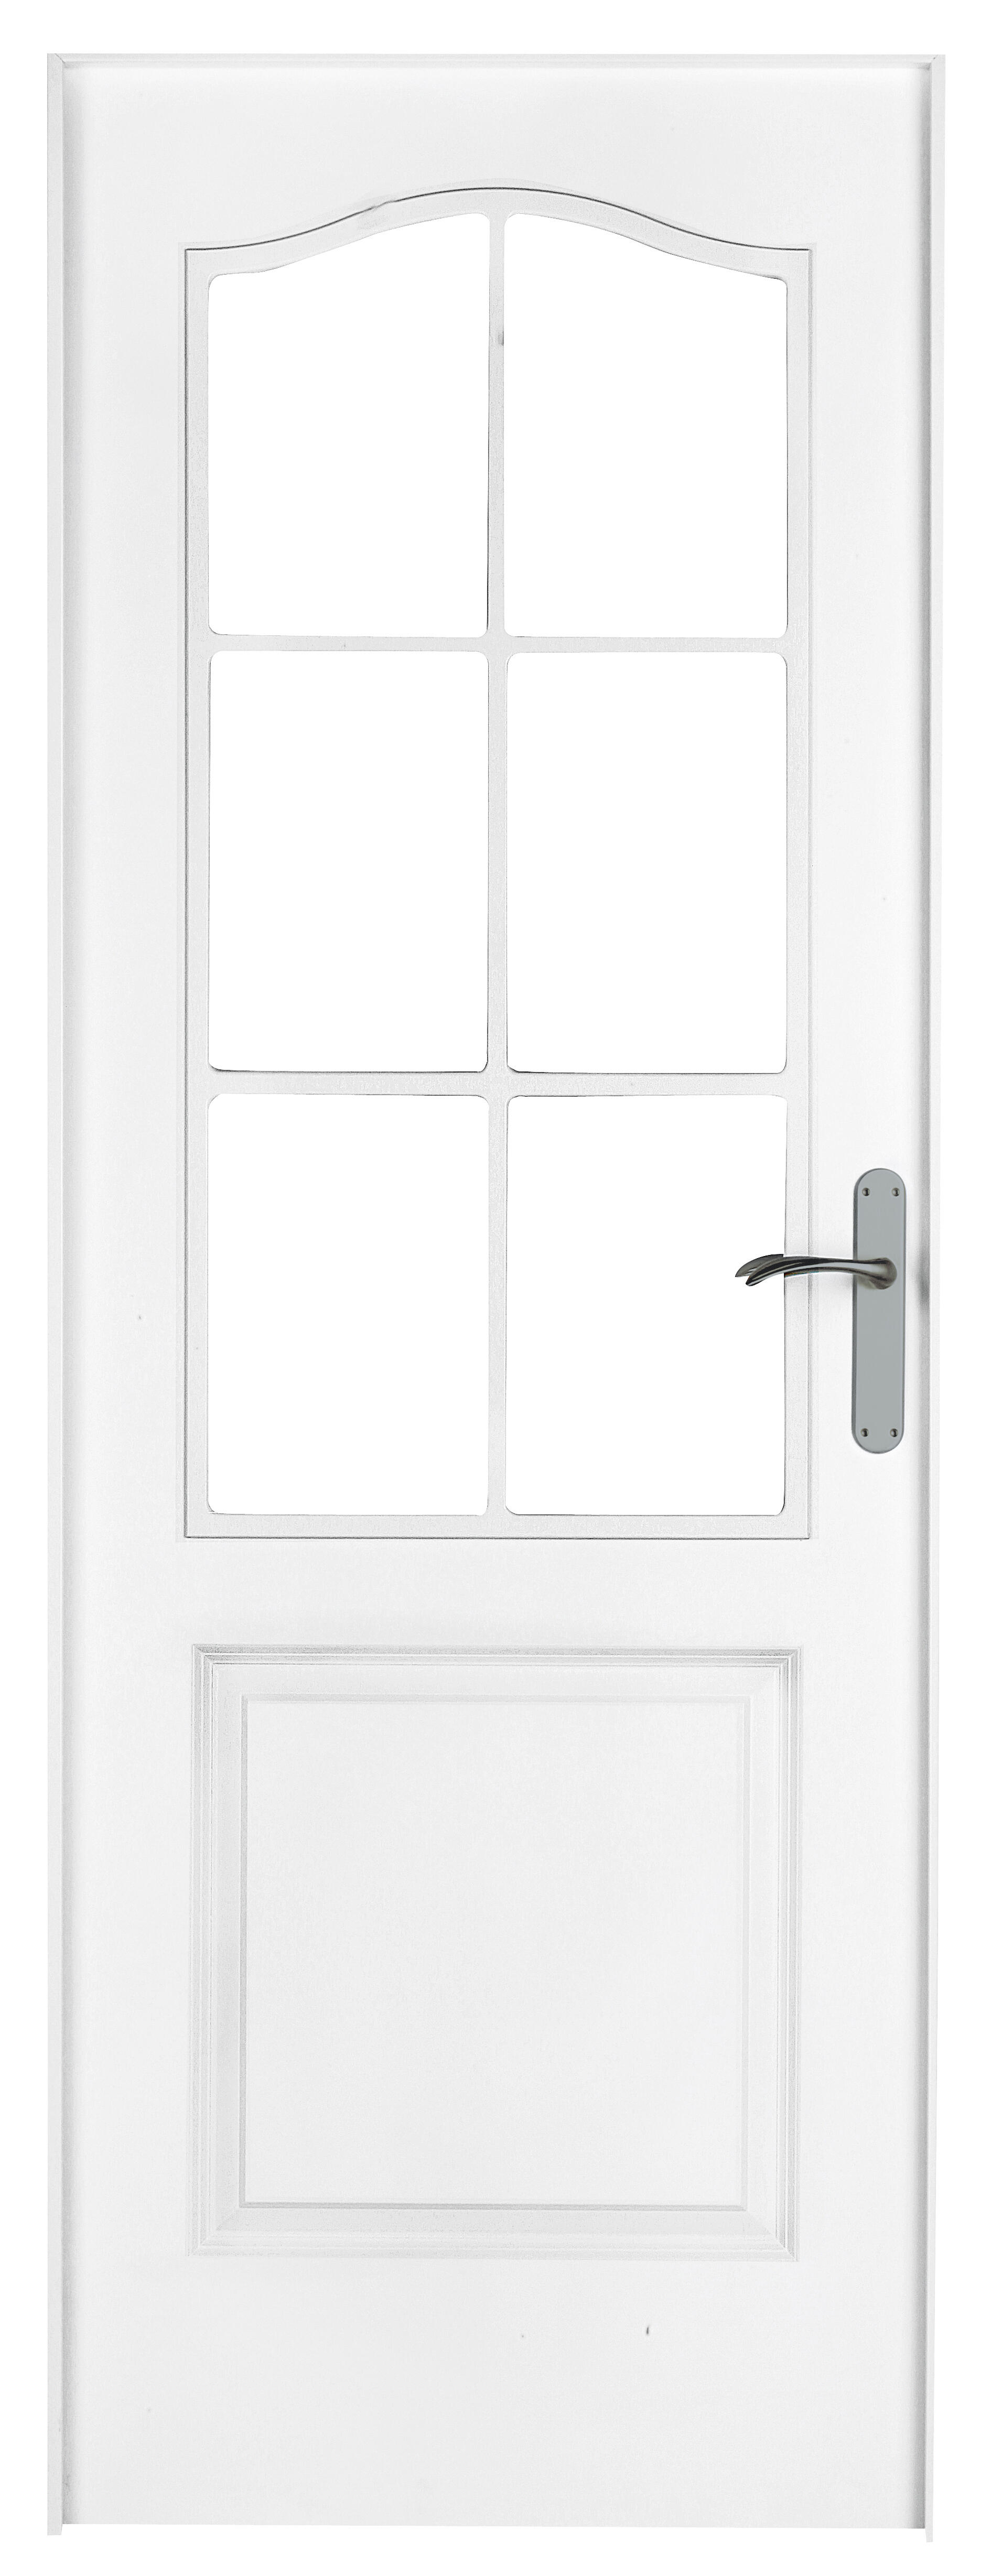 Puerta praga blanco apertura izquierda con cristal 72.5cm